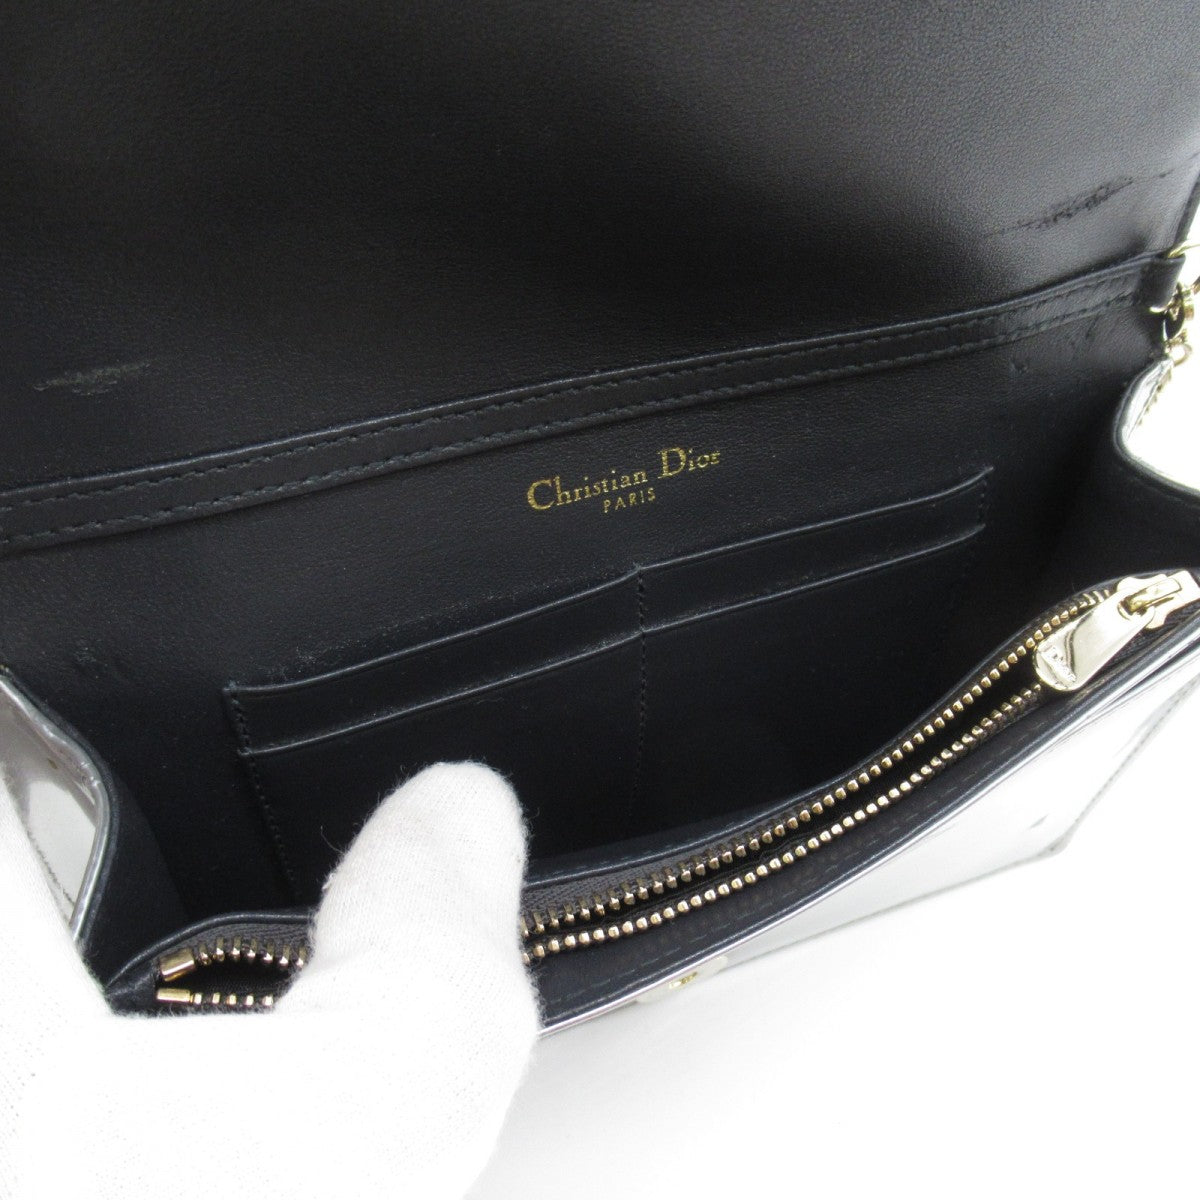 Micro Cannage Metallic Leather Diorama Bag – LuxUness